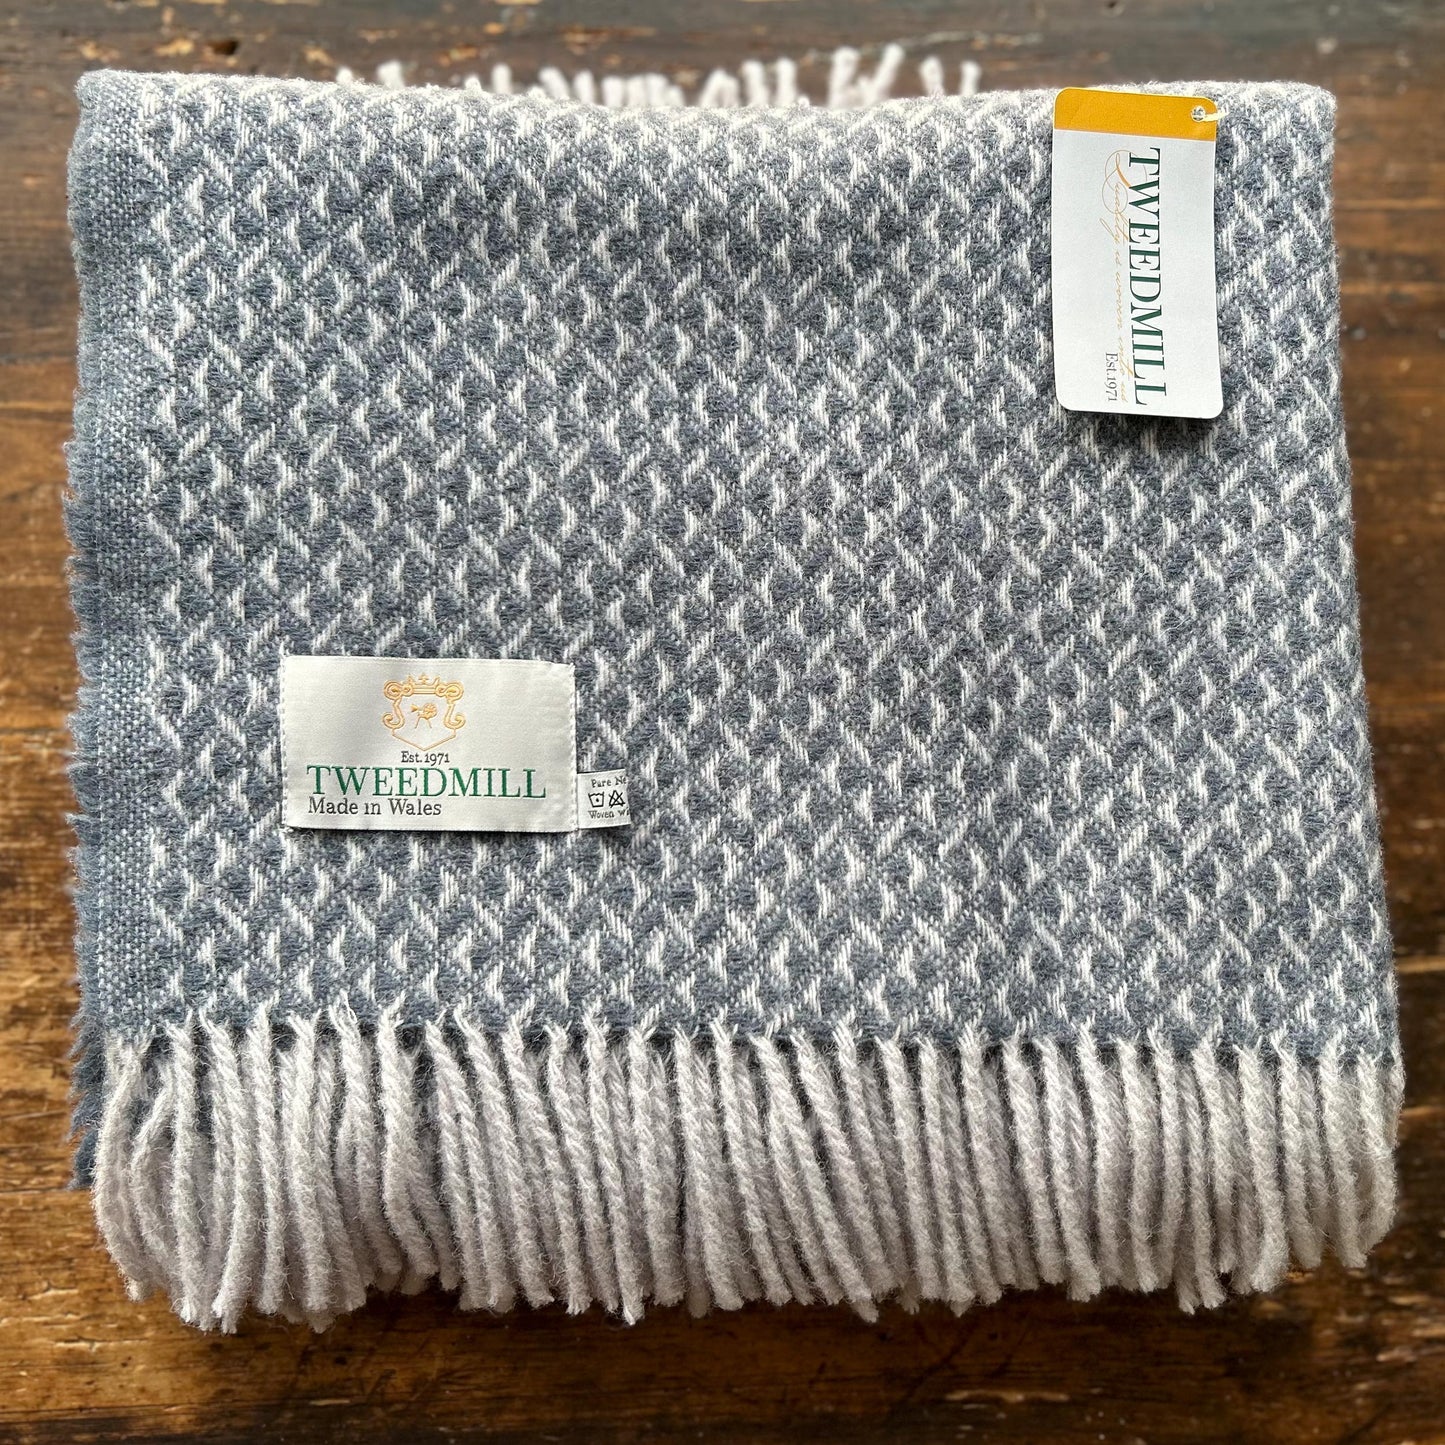 Throw / Blanket - New Wool - Welsh Diamond - Blue Slate Grey